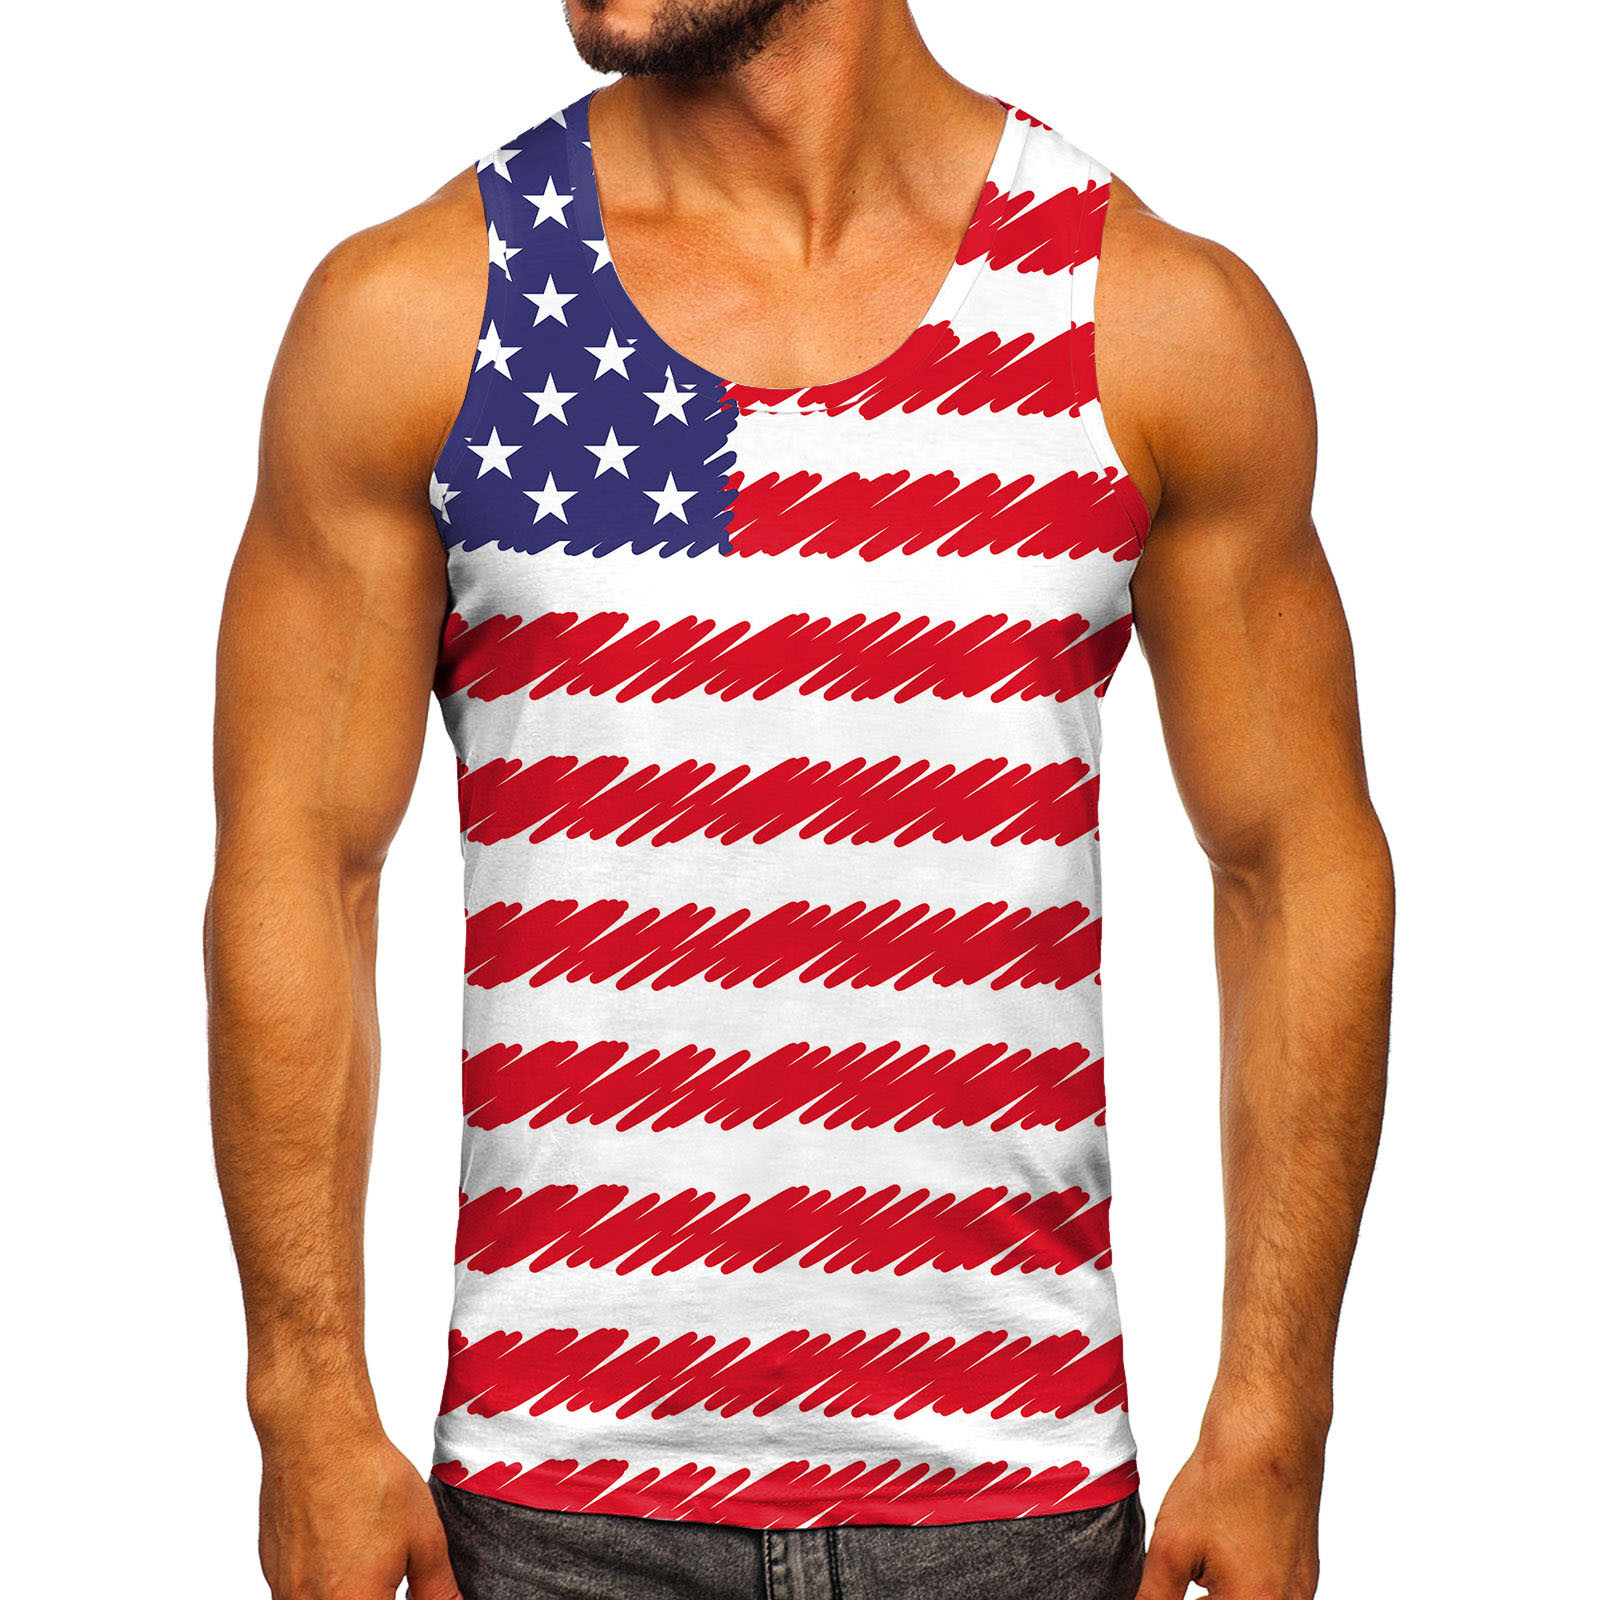 NIEWTR Men's Tank Tops Sleeveless Shirts Workout Muscle Mesh Gym ...